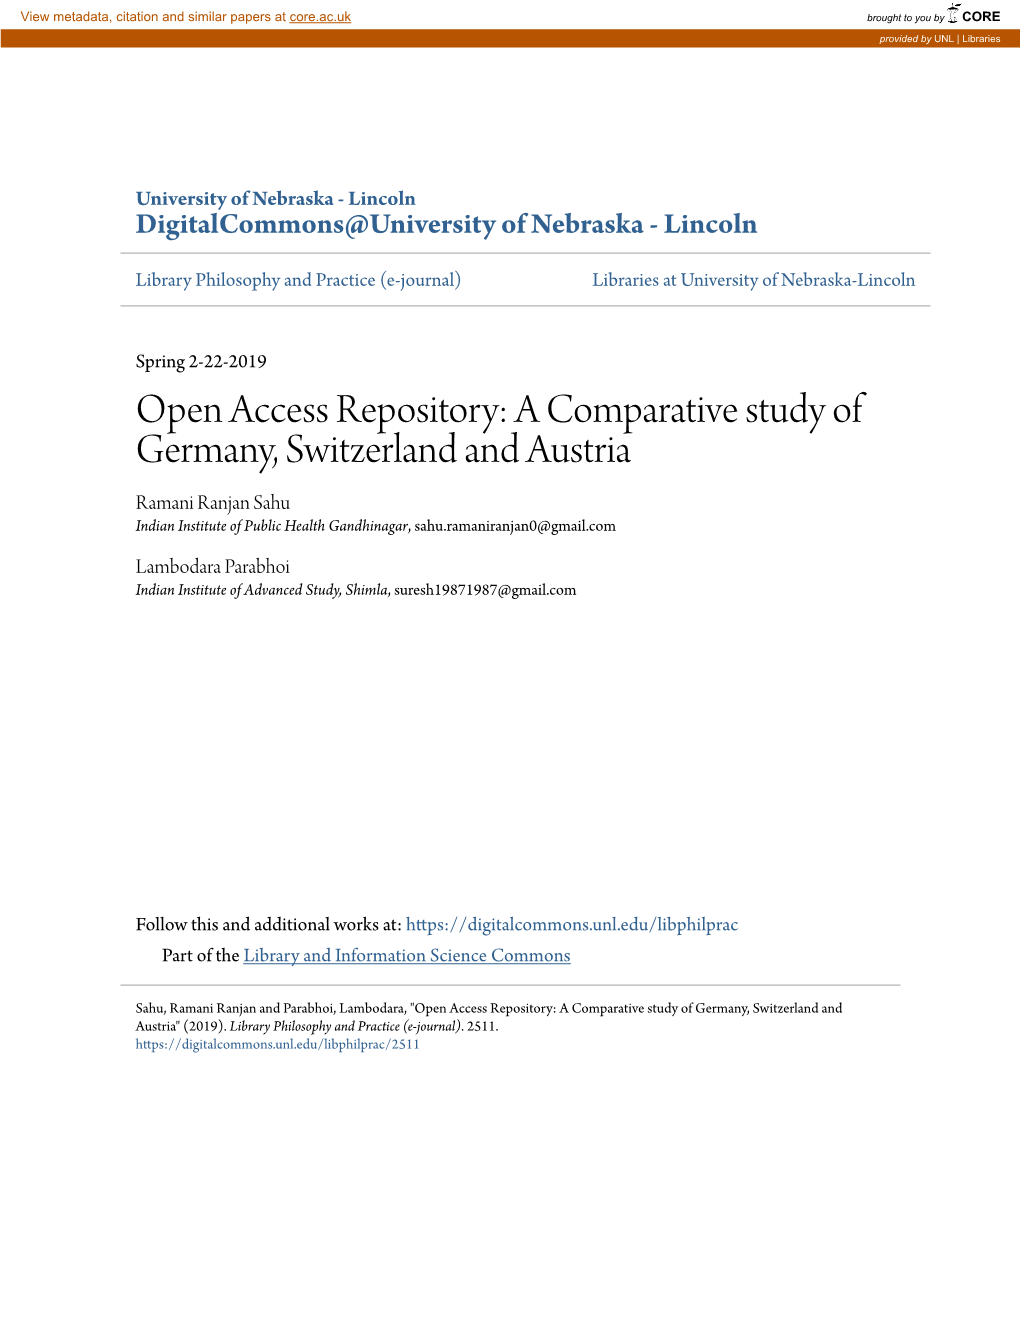 Open Access Repository